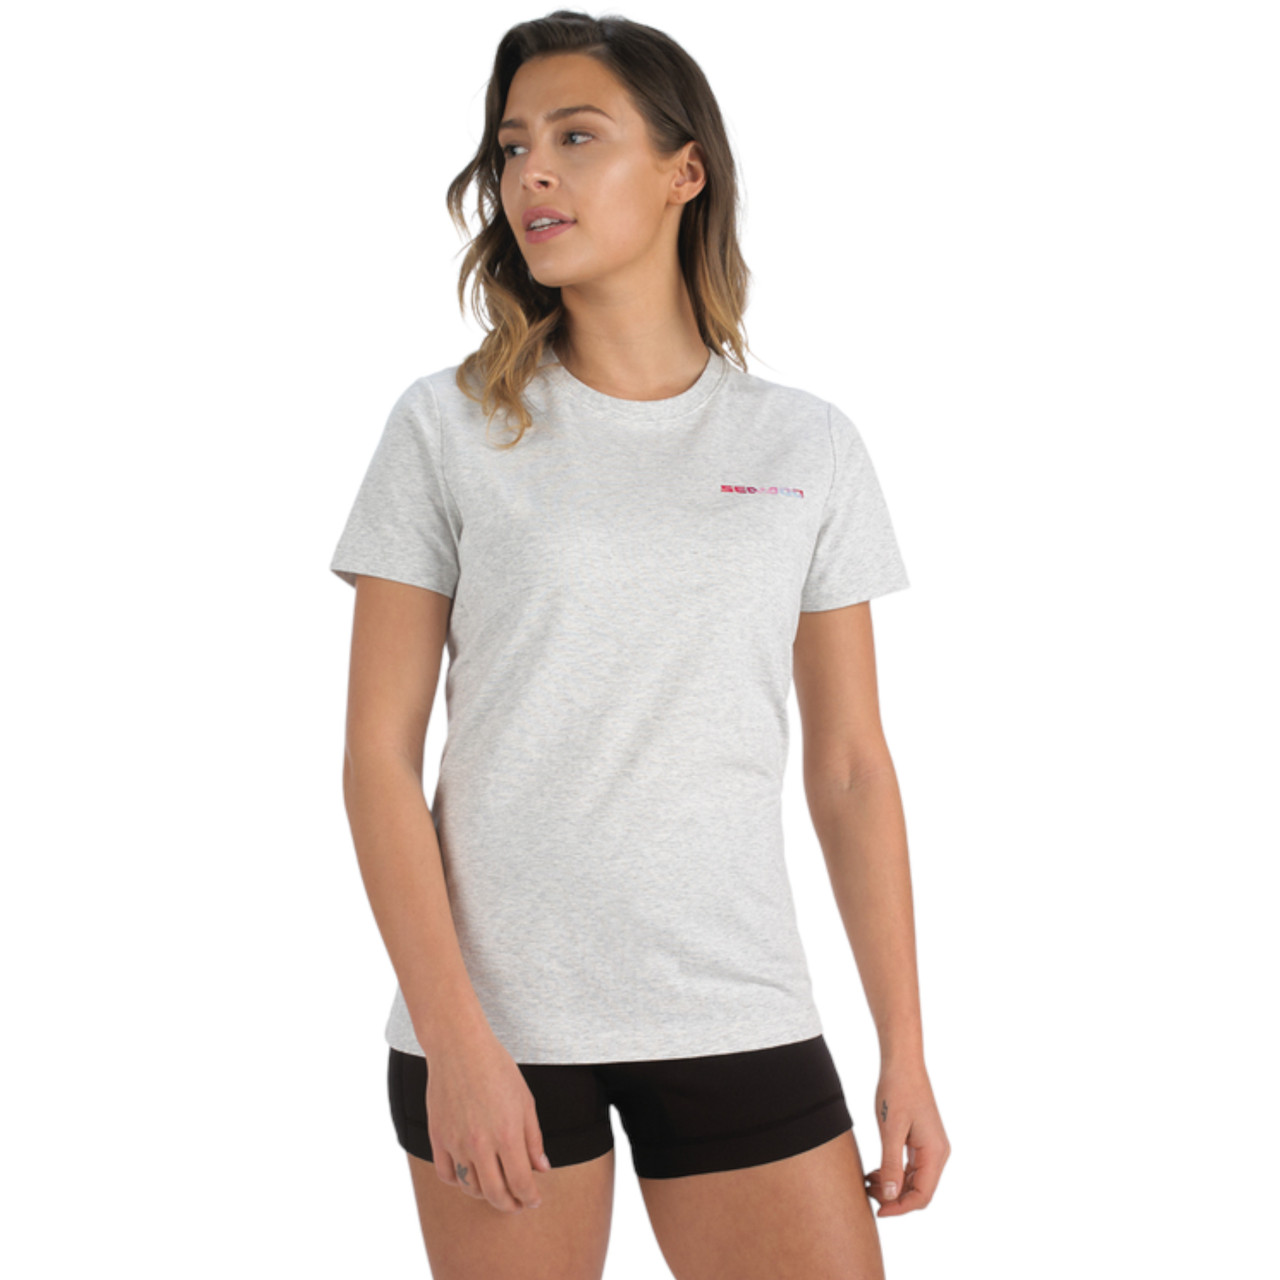 Sea-Doo New OEM Women's Large Branded Cotton Spandex Sunset T-Shirt, 4546810957